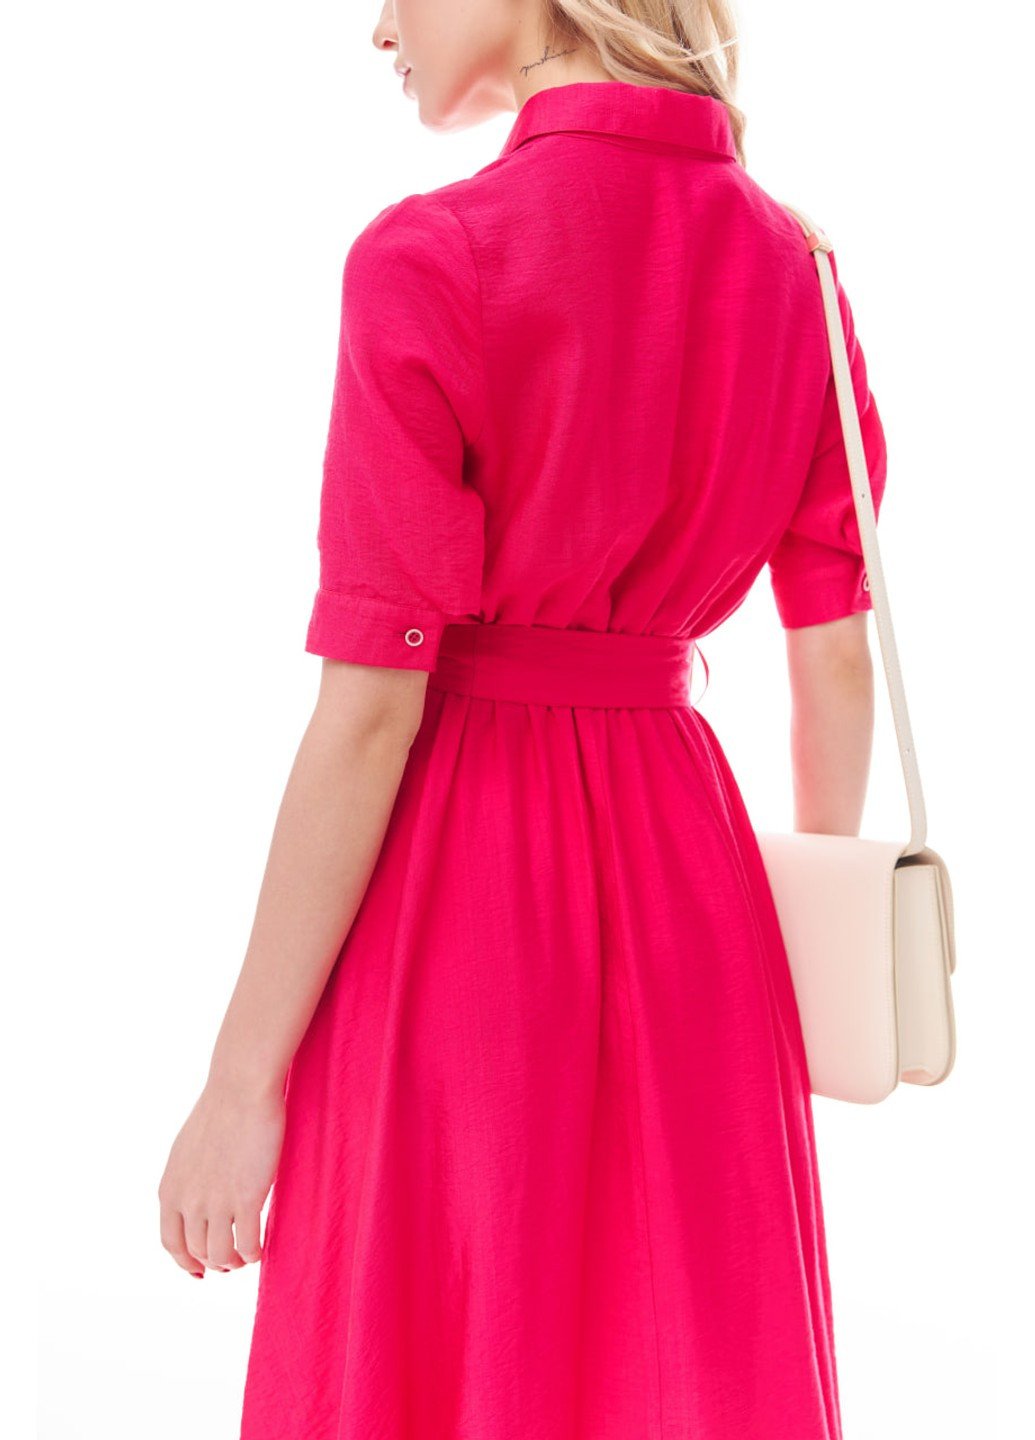 Фуксиновое (цвета Фуксия) платье с воротником. цвет - фуксия Oona